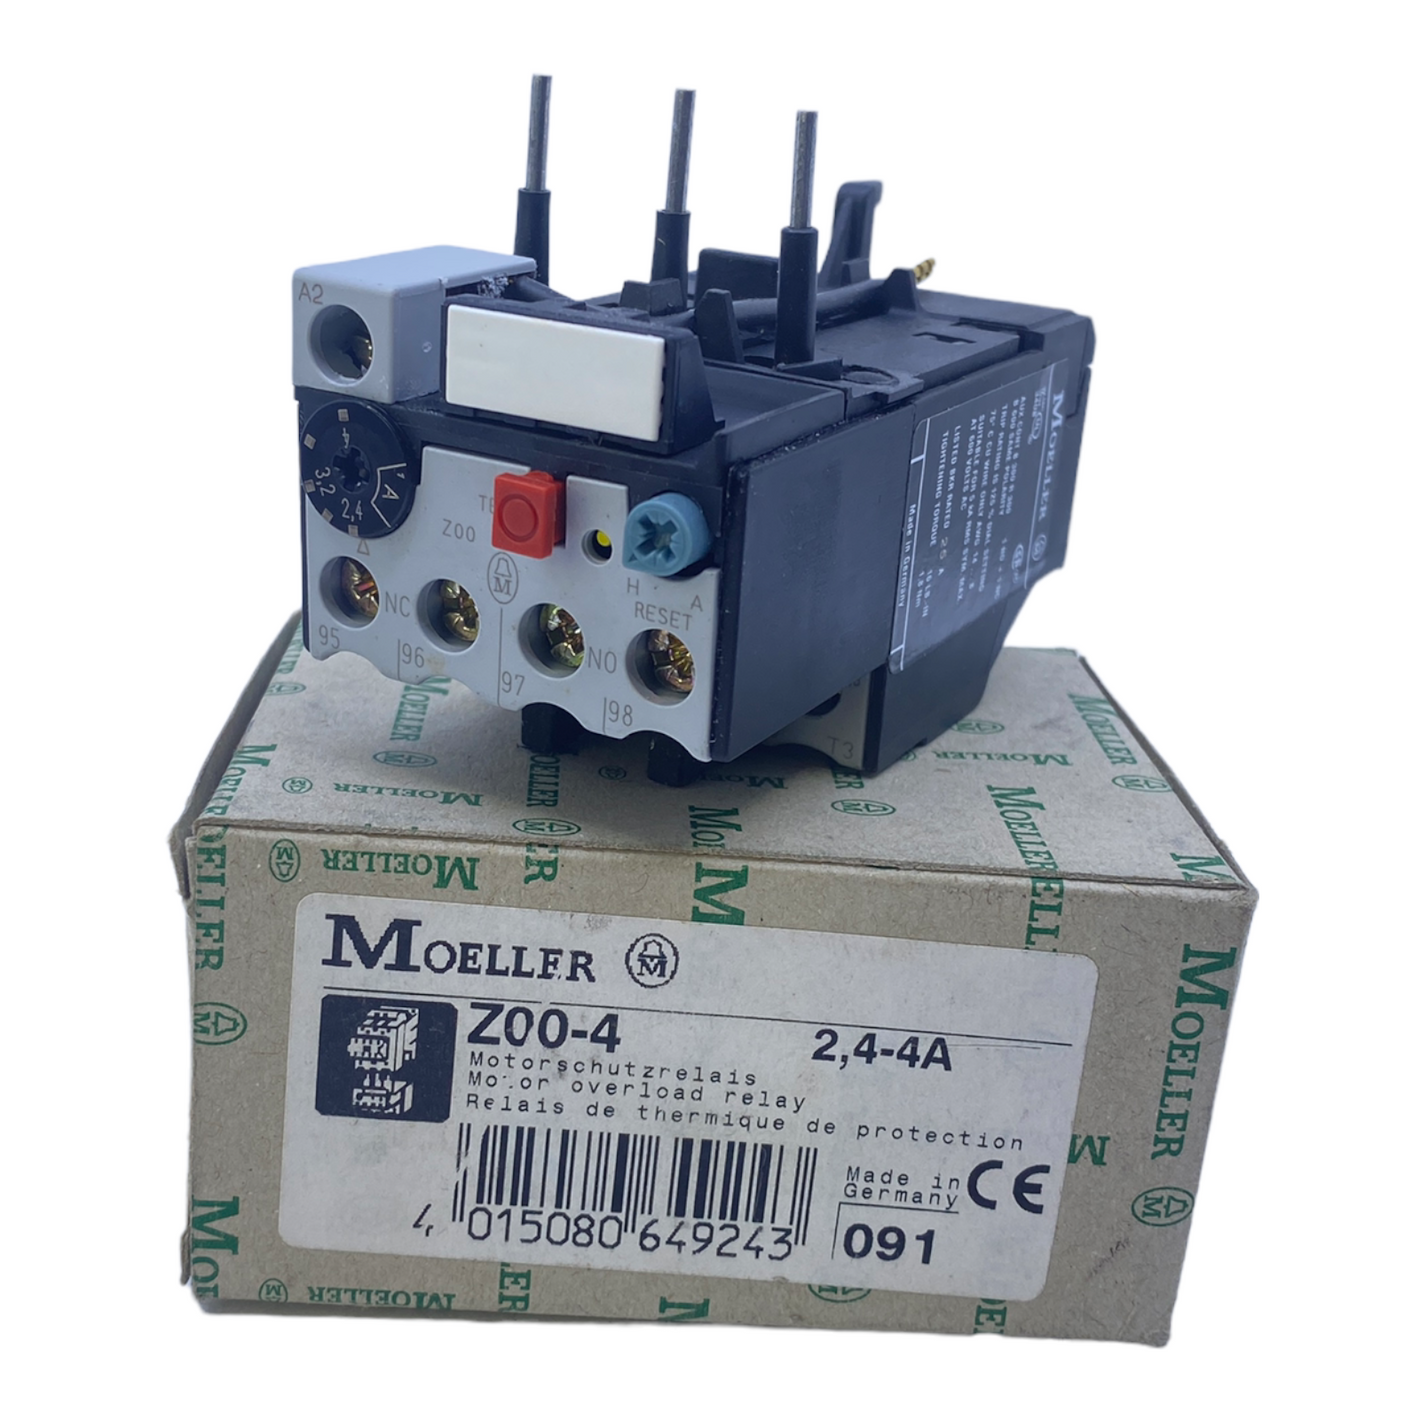 Klöckner-Moeller Z00-4 motor protection relay 2.4...4A 